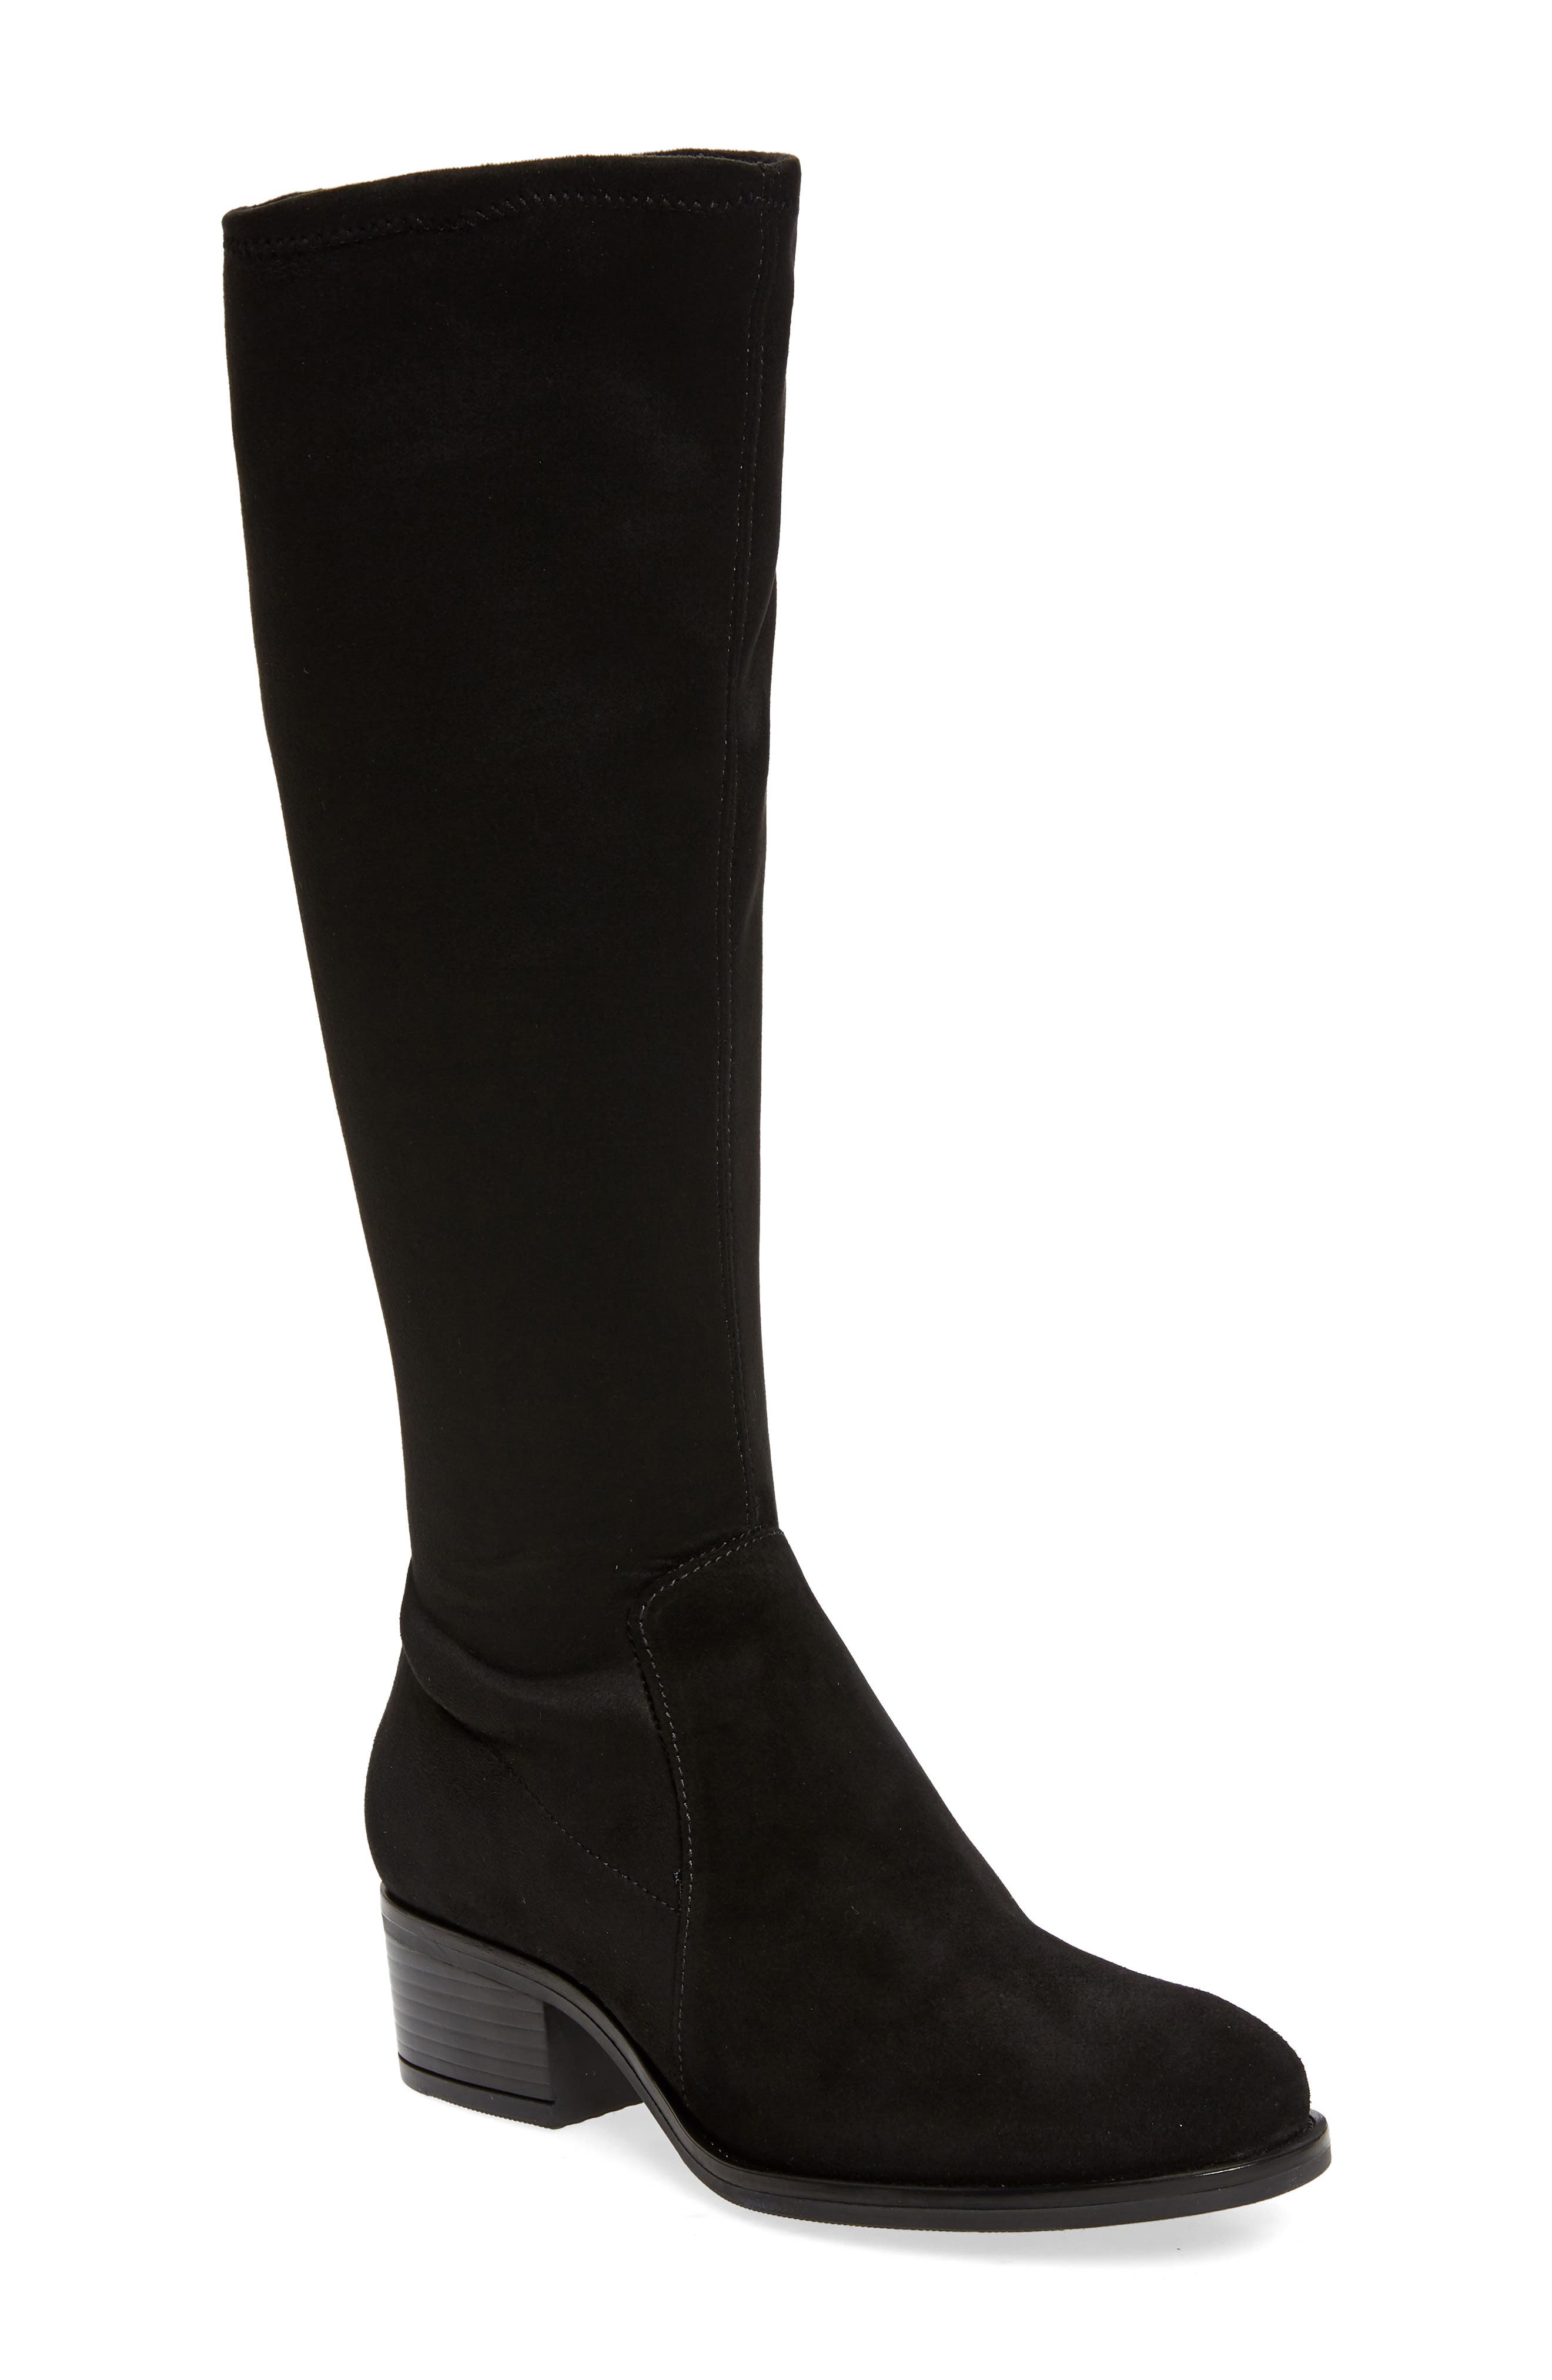 narrow calf black suede boots